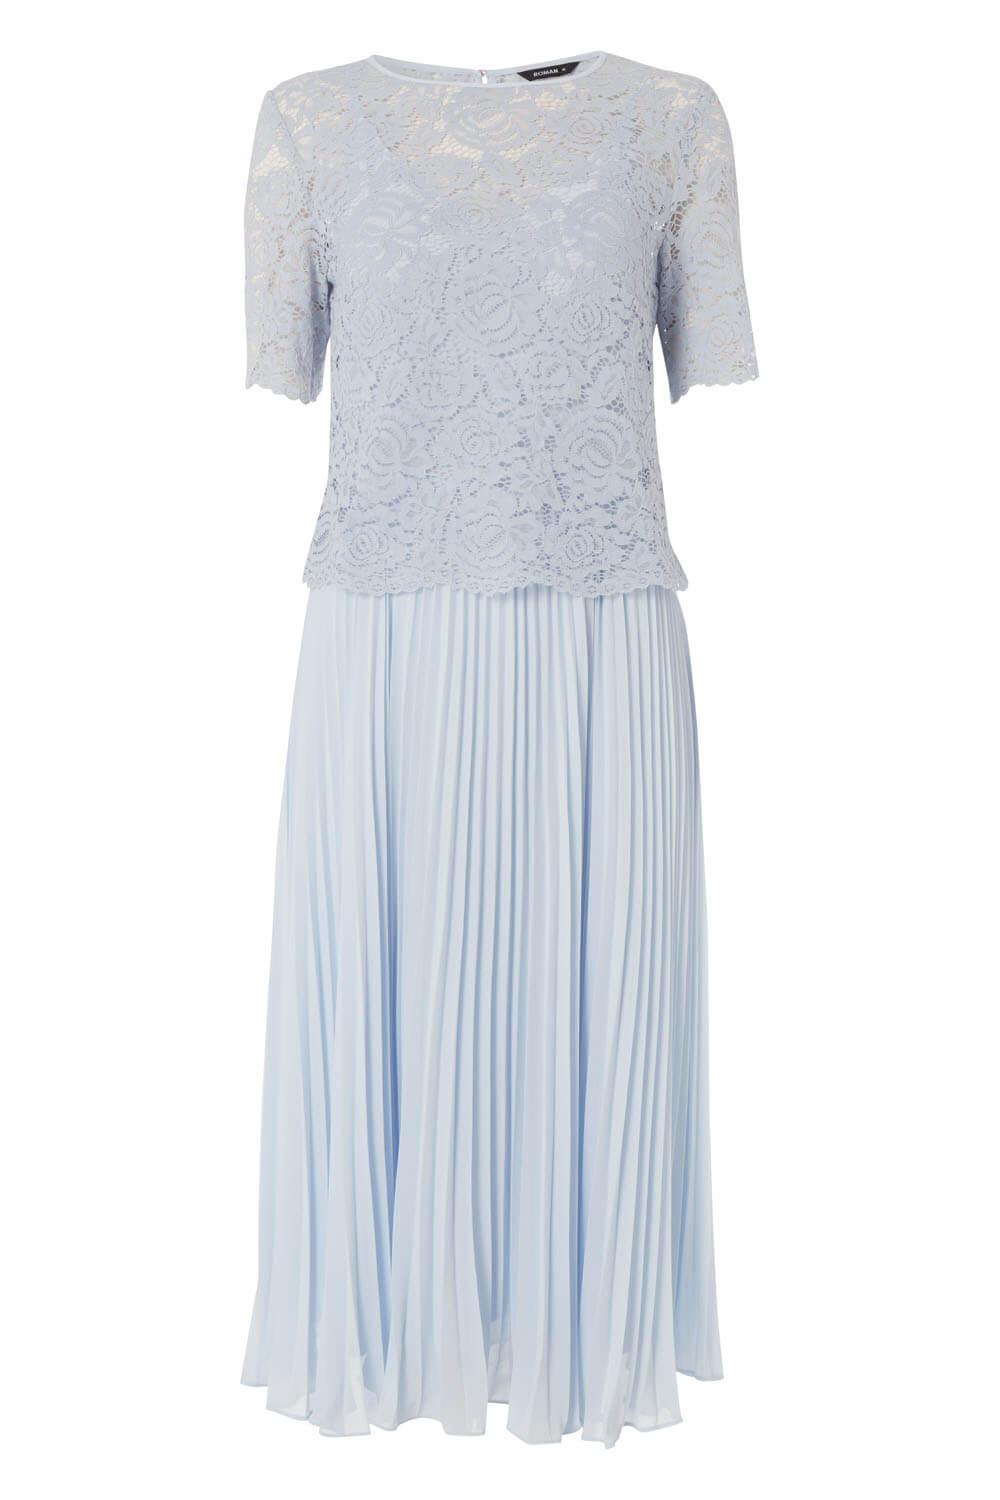 Light Blue  Lace Top Overlay Pleated Midi Dress, Image 5 of 5